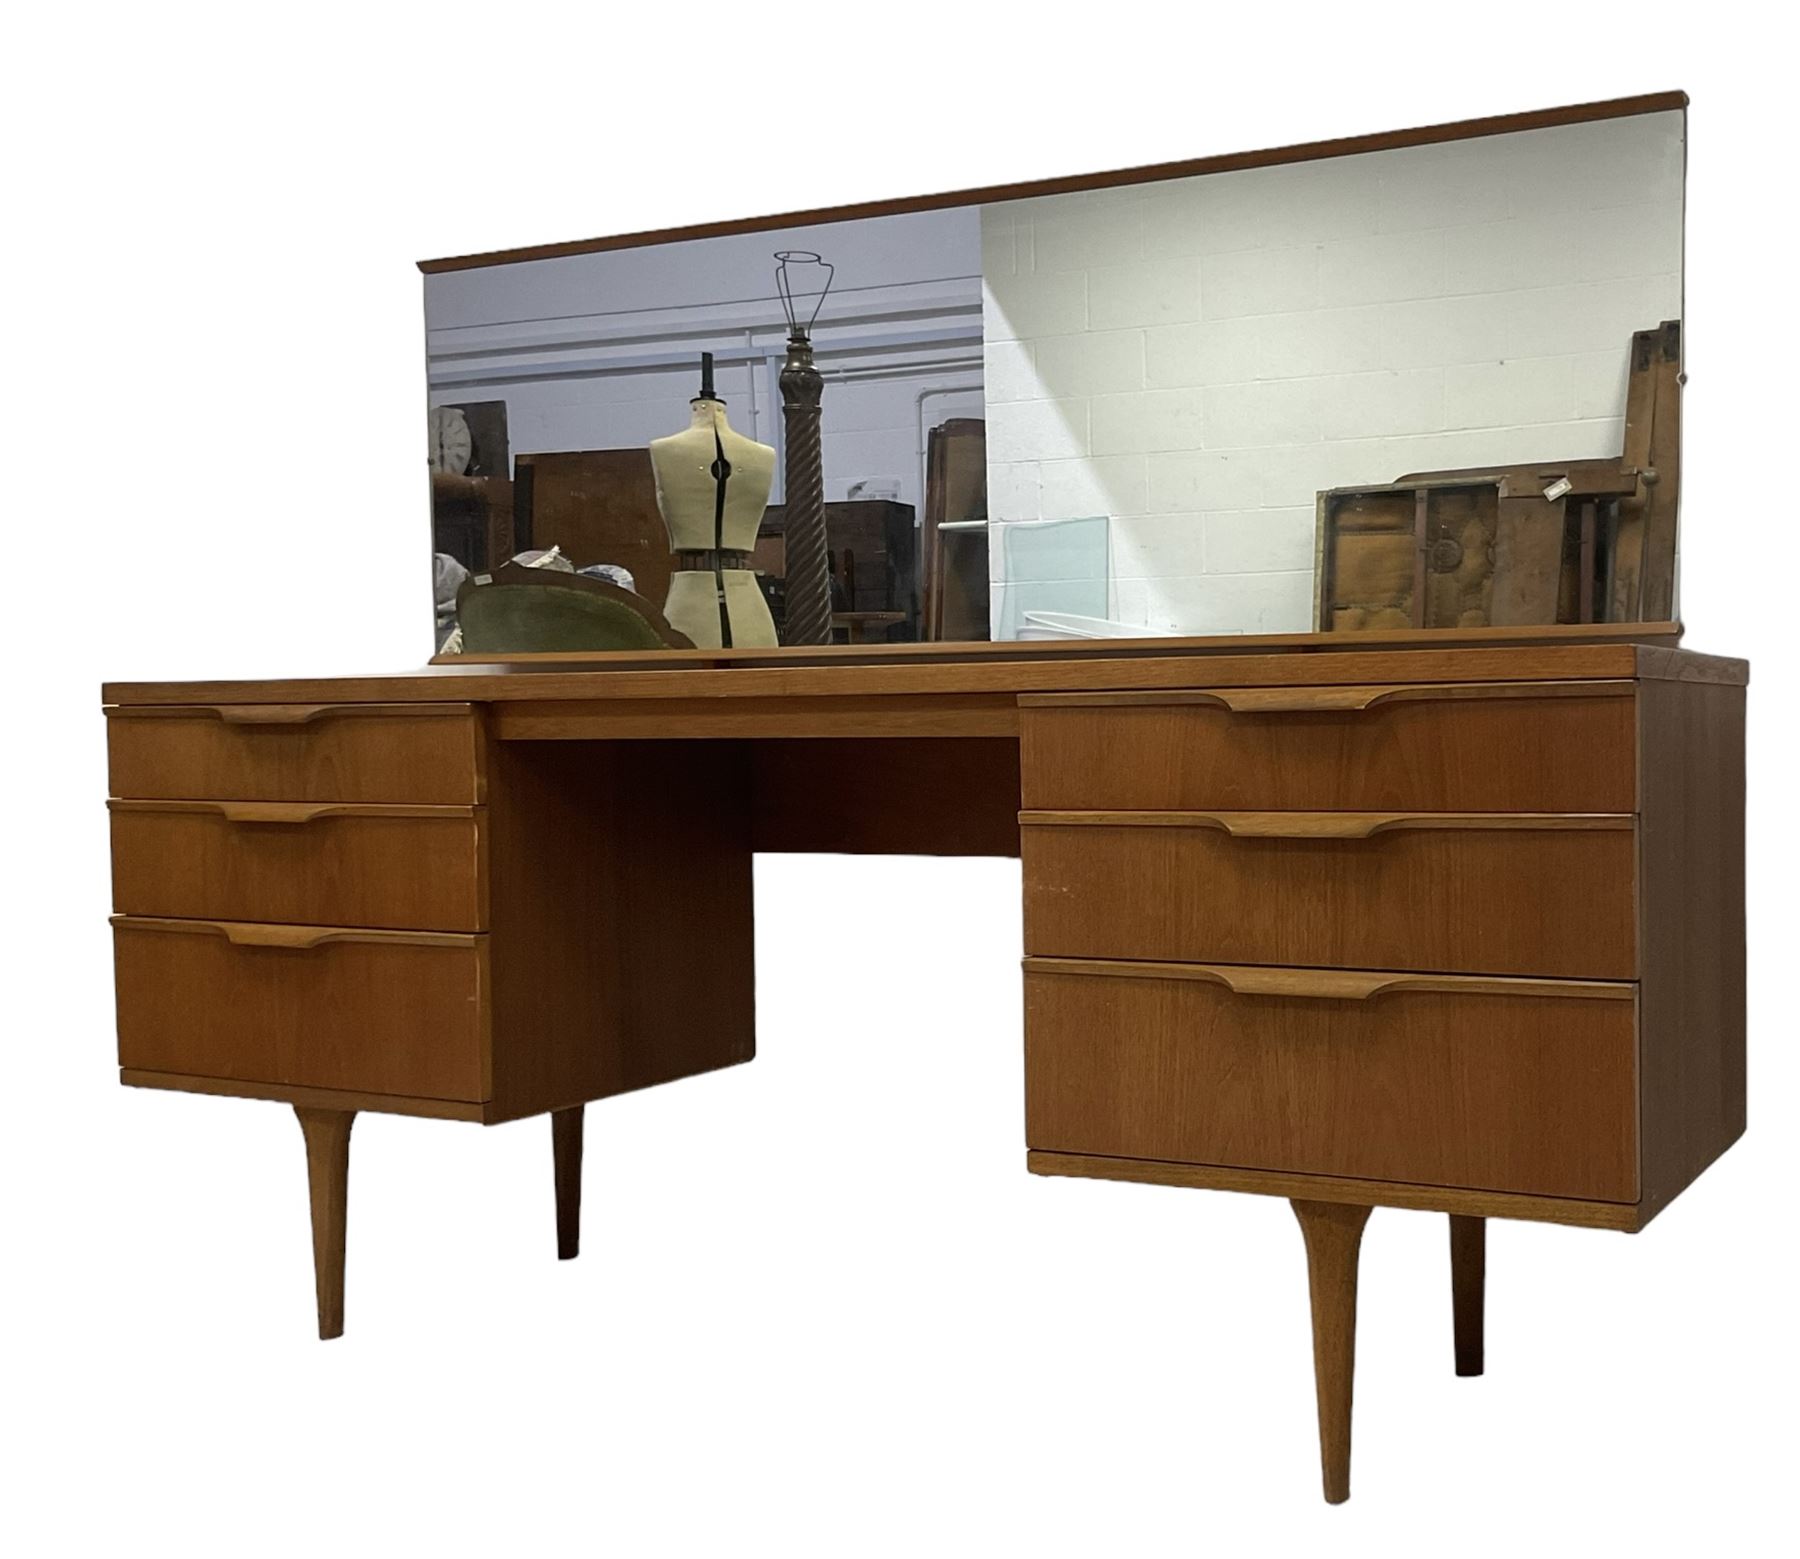 Austinsuite - mid-20th century teak dressing table - Image 2 of 8